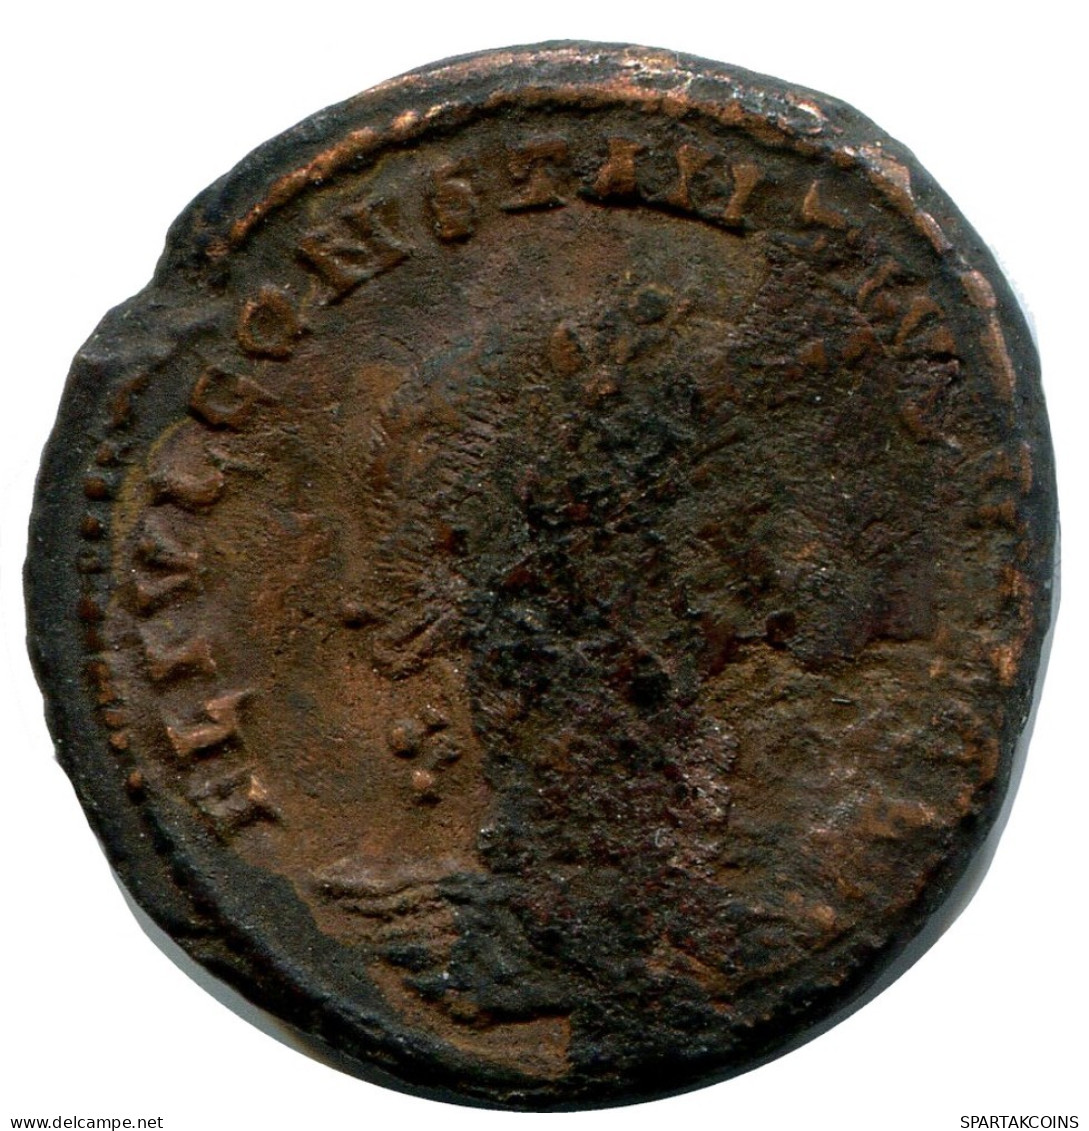 CONSTANTIUS II MINTED IN ALEKSANDRIA FOUND IN IHNASYAH HOARD #ANC10199.14.U.A - El Impero Christiano (307 / 363)